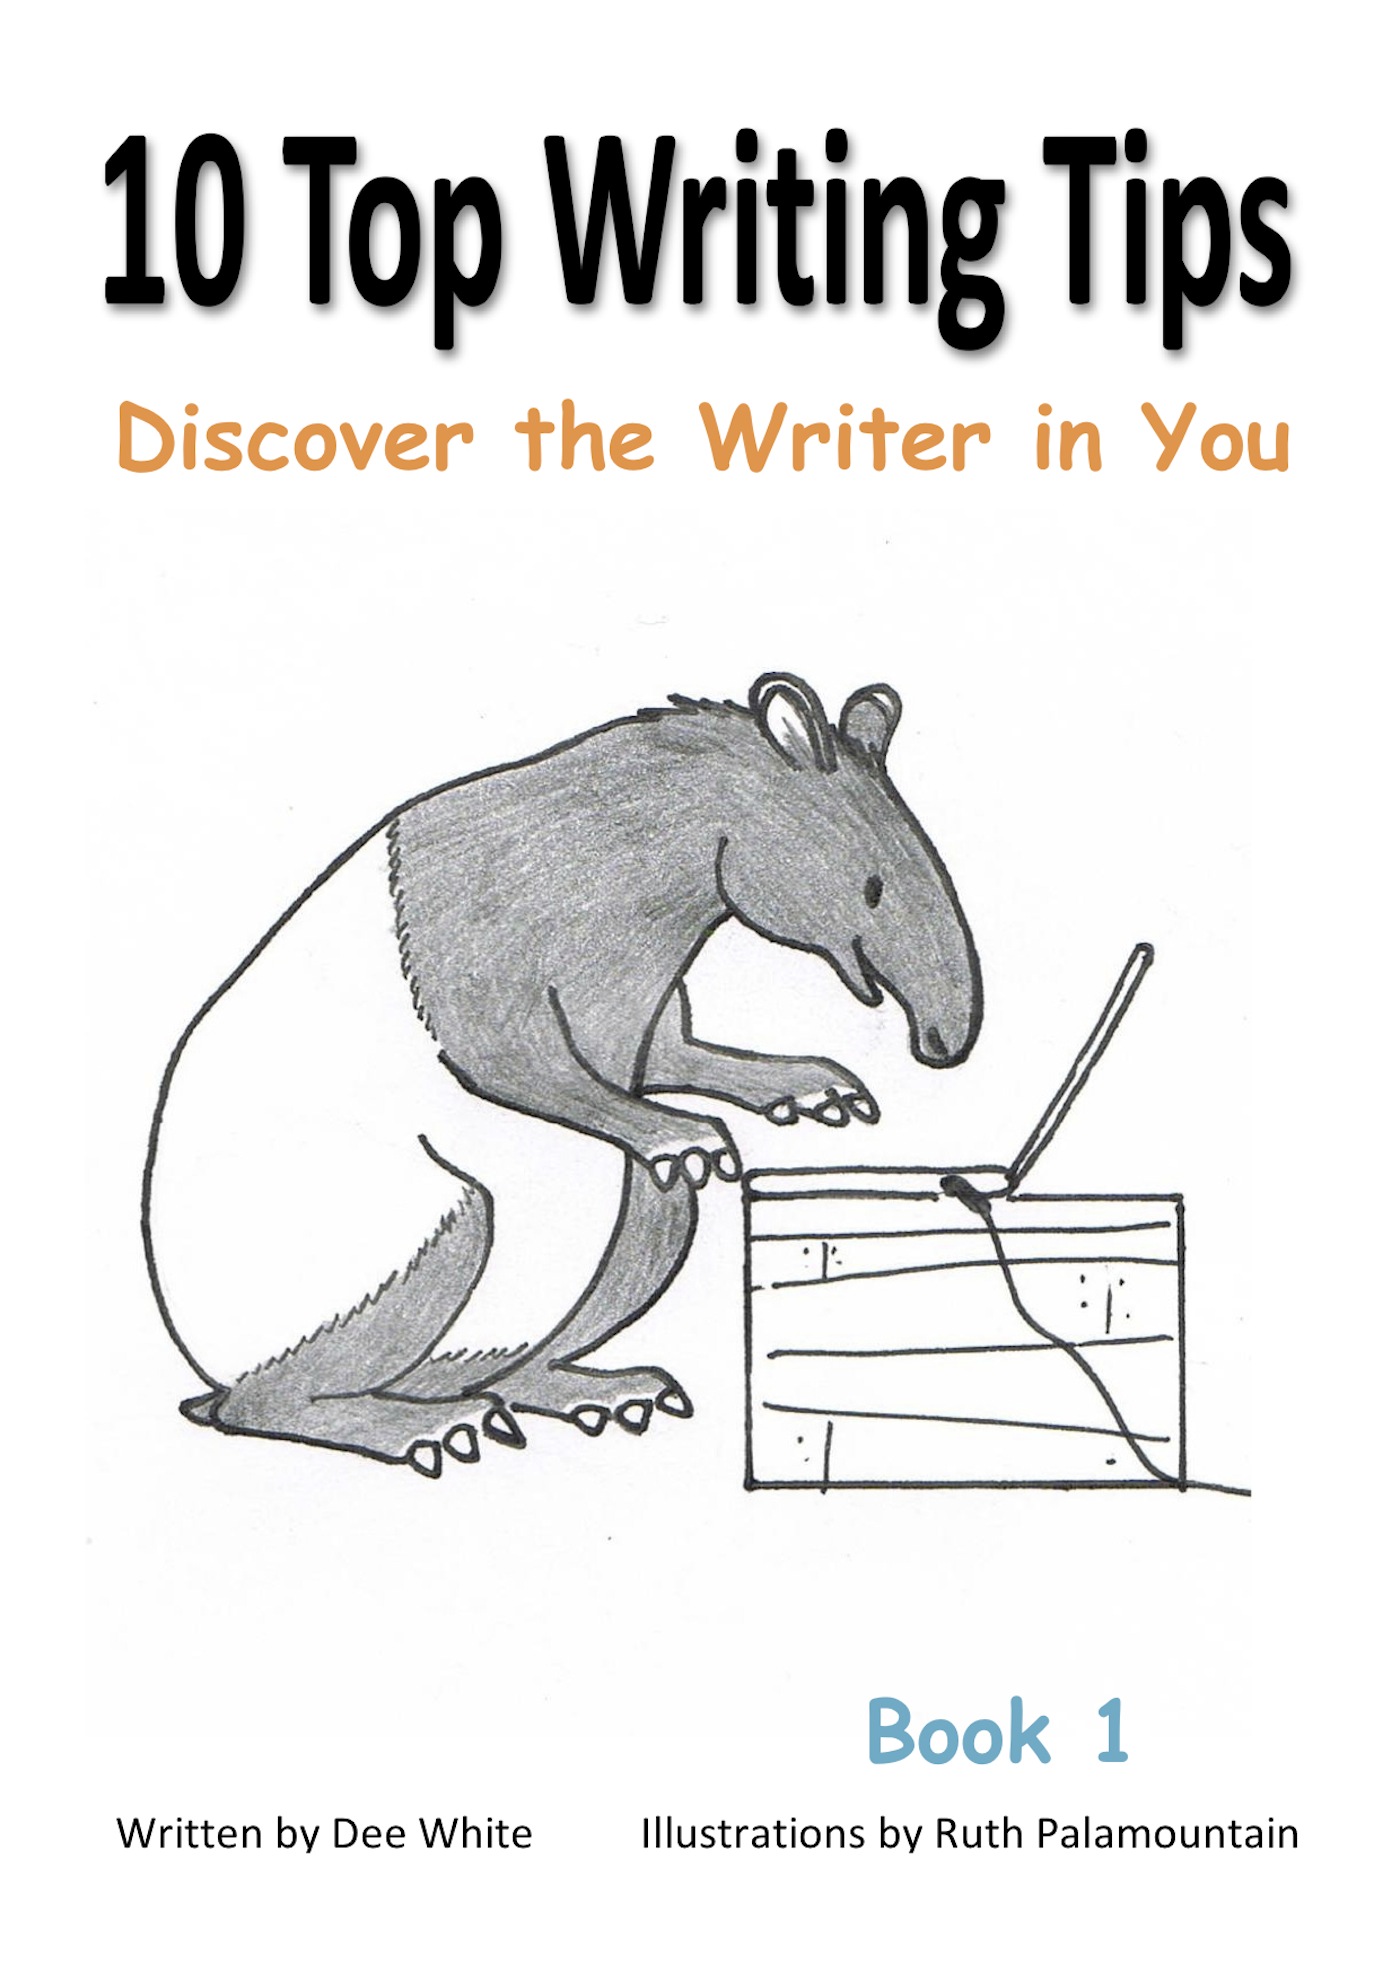 How to Write a Novel: Writing the Draft